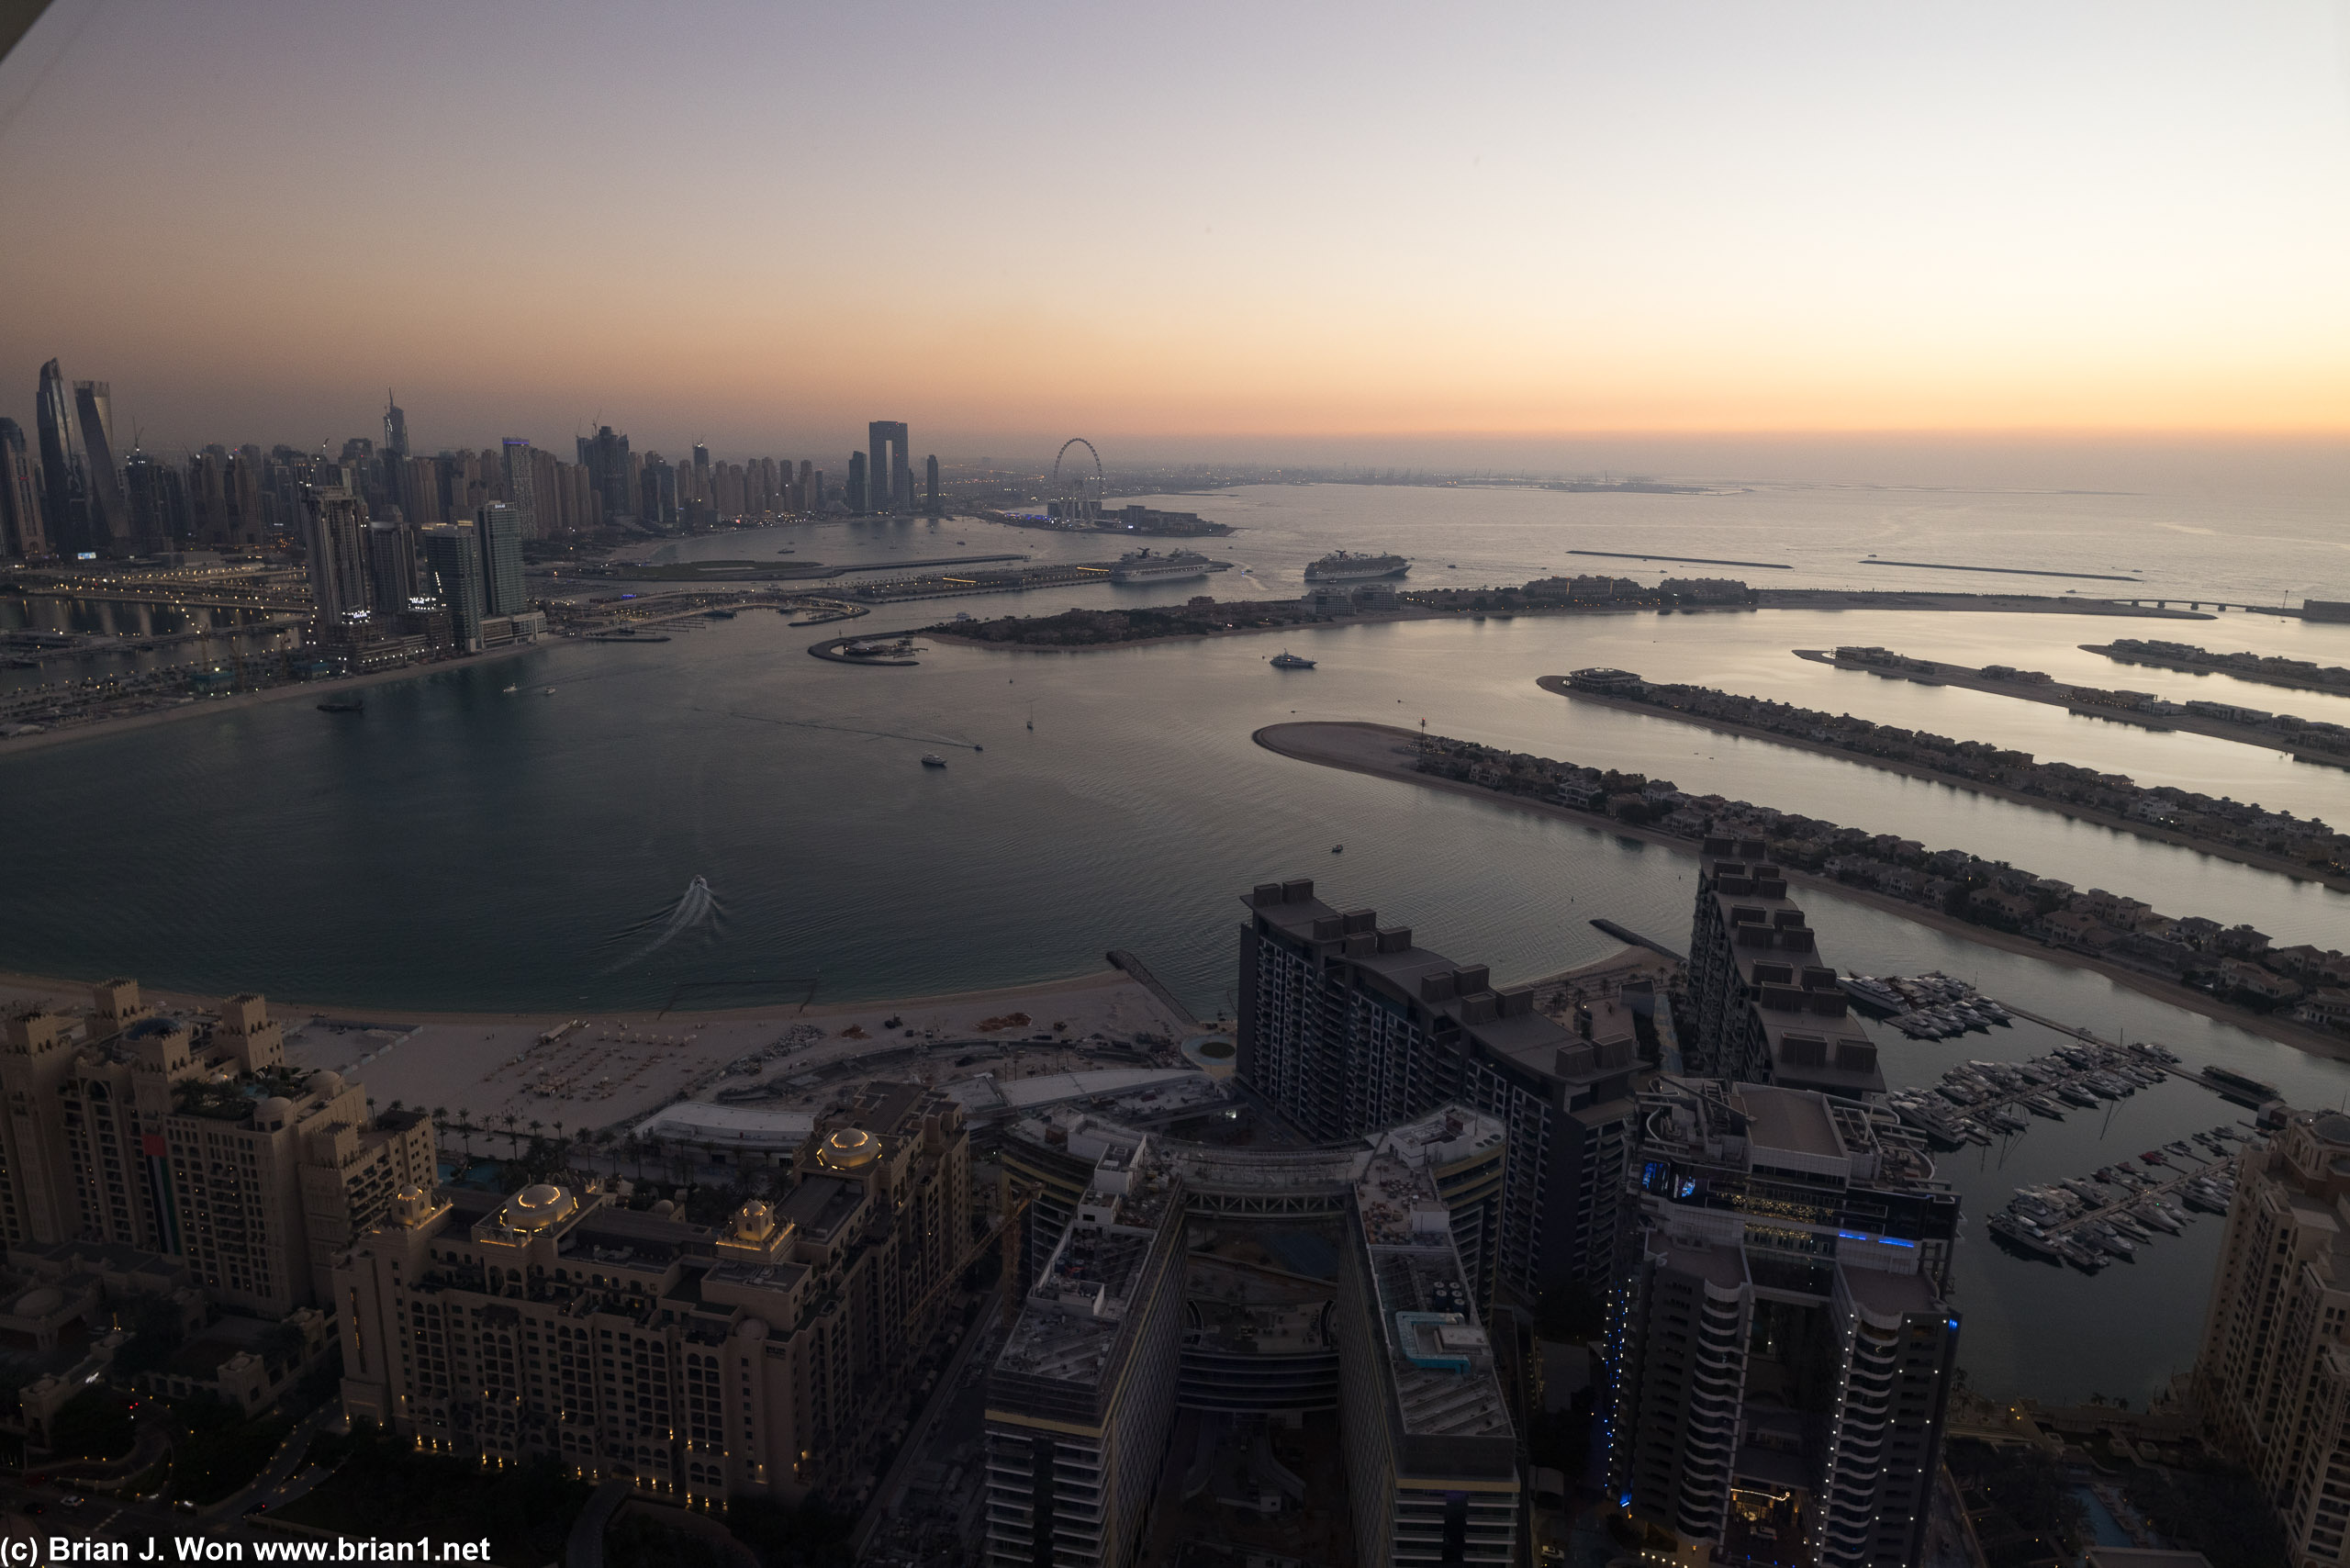 Looking southwest towards Dubai Marina.